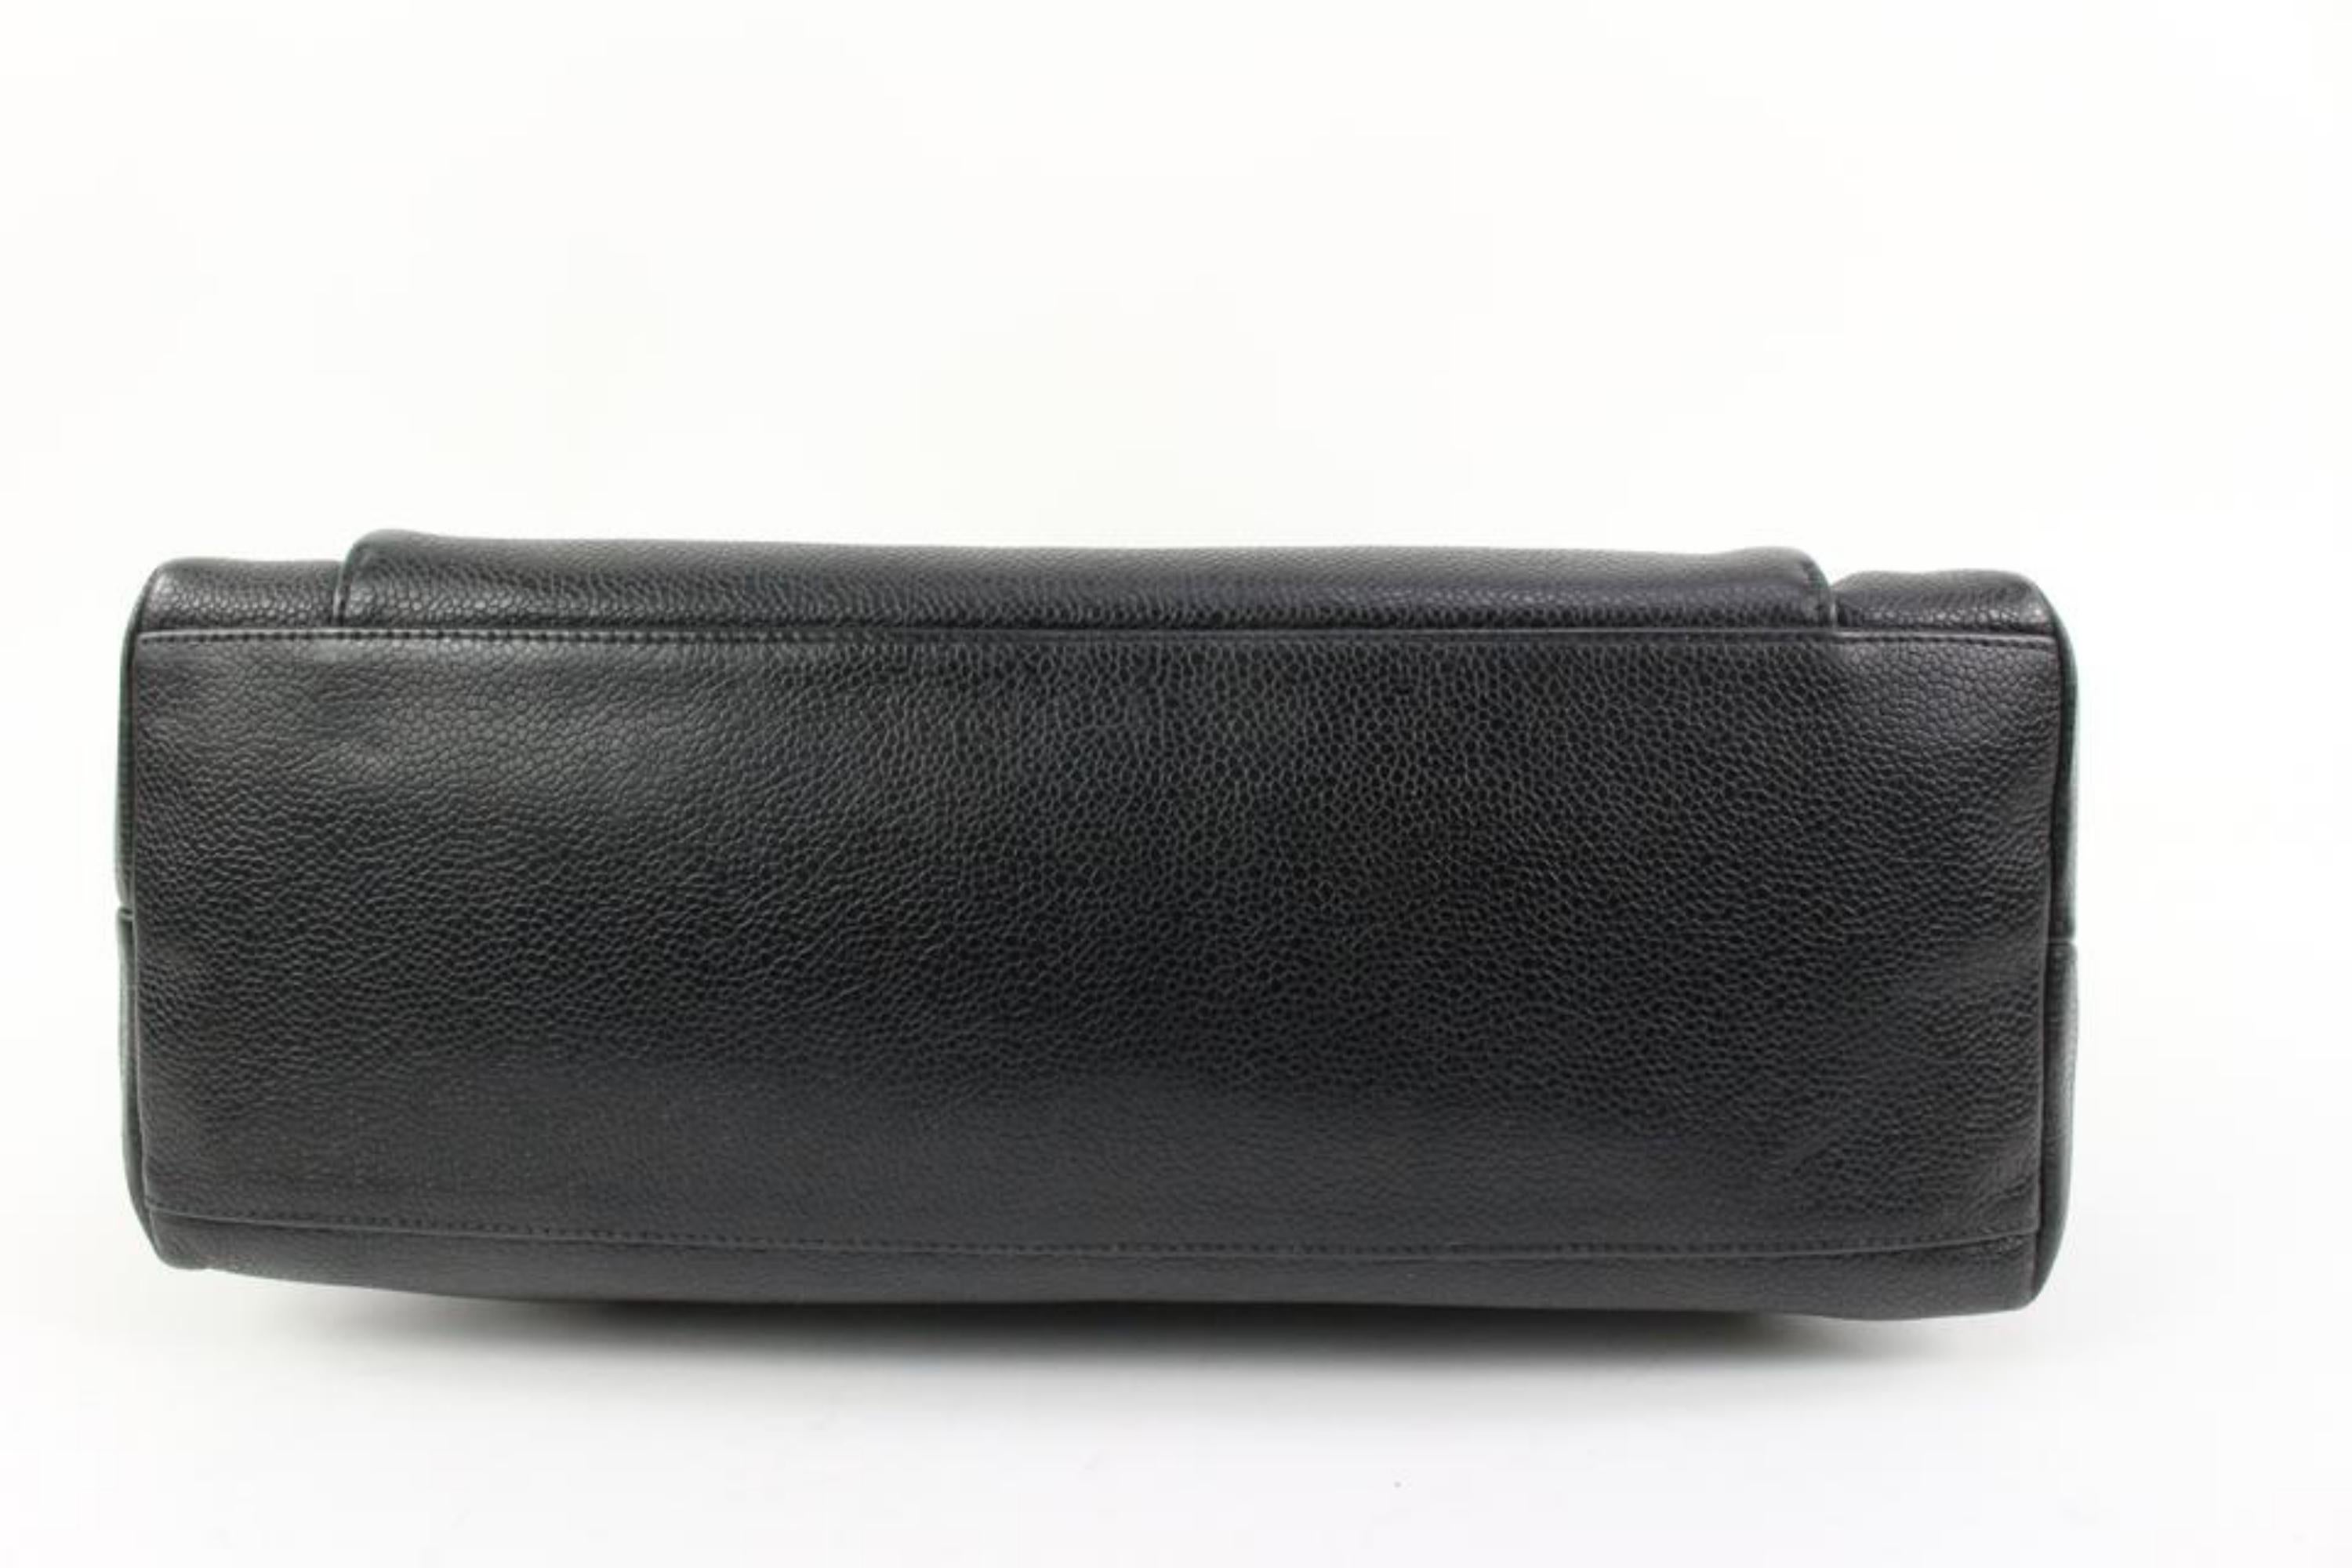 Chanel Black Caviar Leather CC Turnlock Zip Tote Shoulder Bag 54ck315s 4